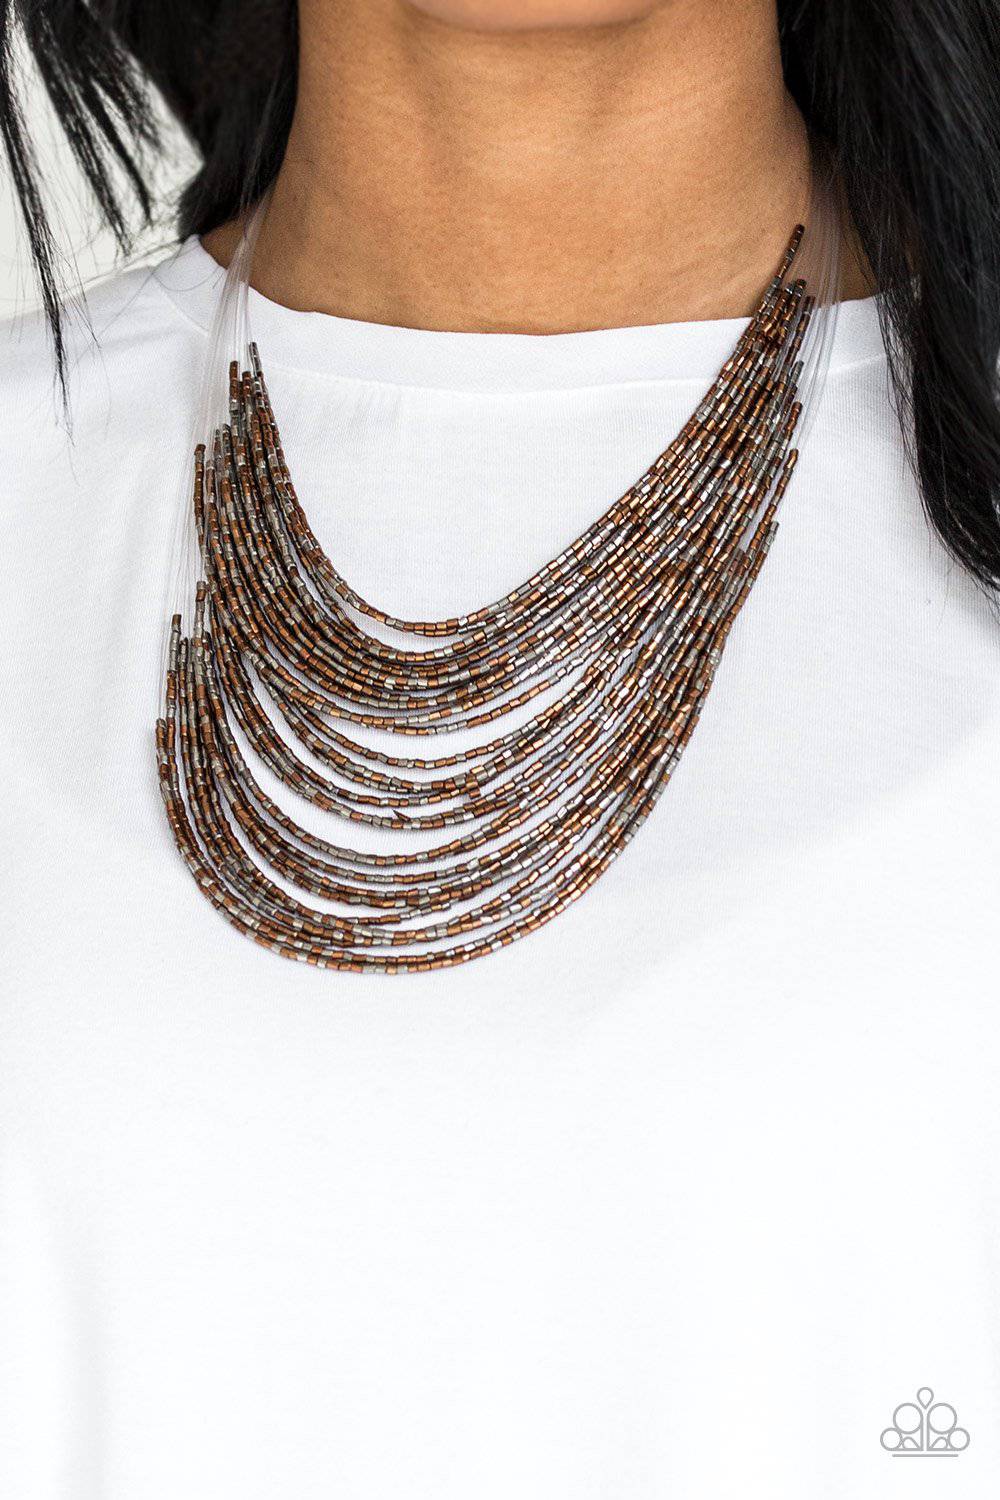 Catwalk Queen -Copper & Gunmetal Seed Bead Necklace - Paparazzi Accessories - GlaMarous Titi Jewels